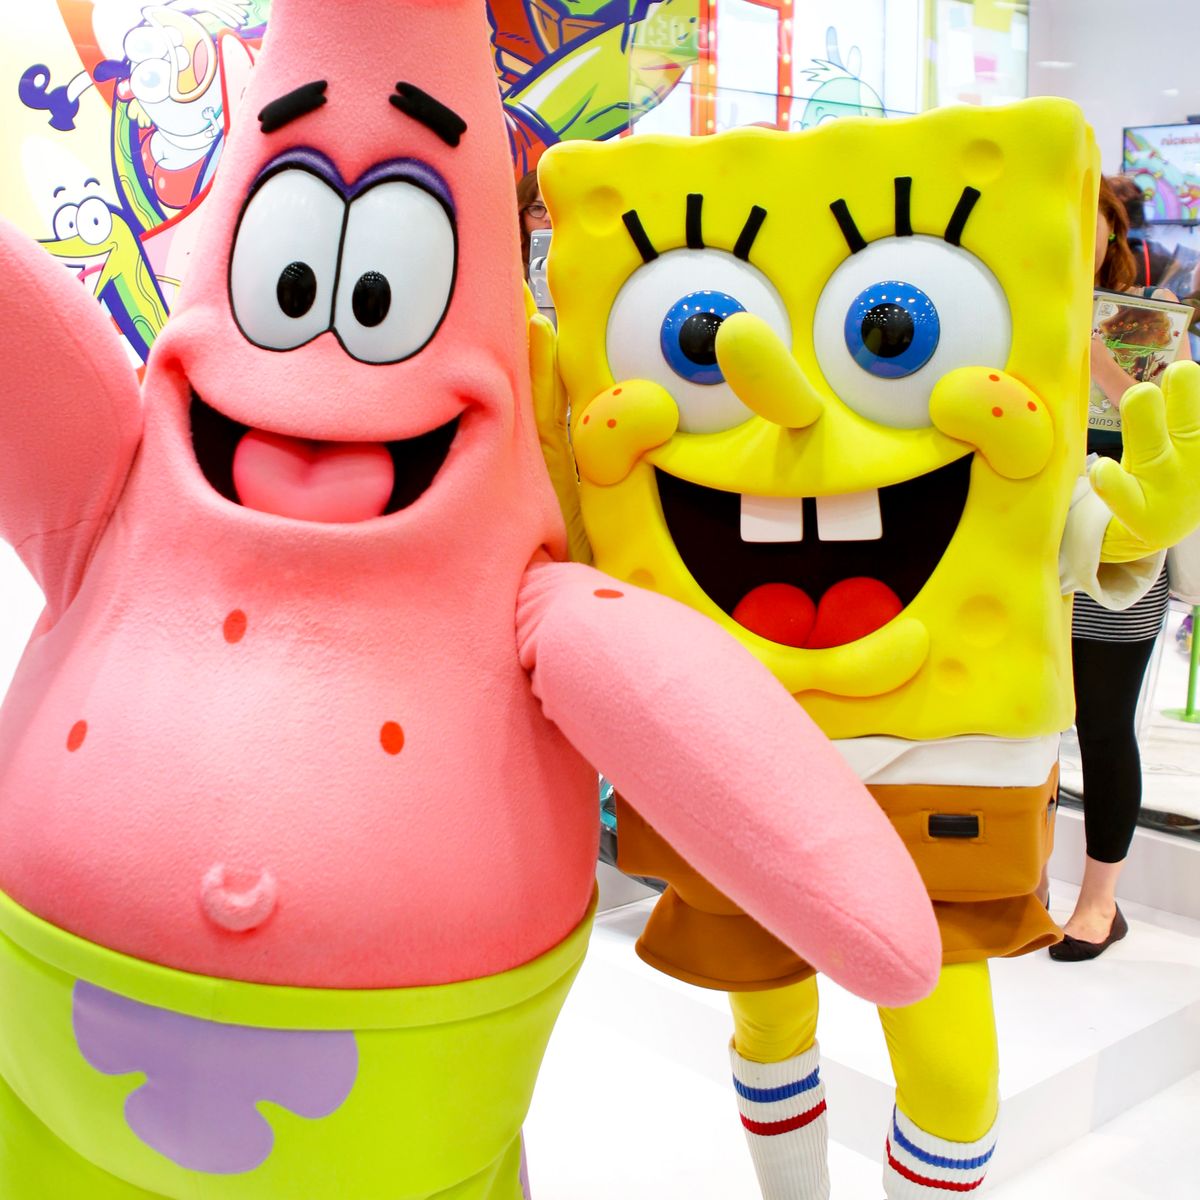 Nickelodeon Announced SpongeBob Is a Member of the LGBTQ+ Community